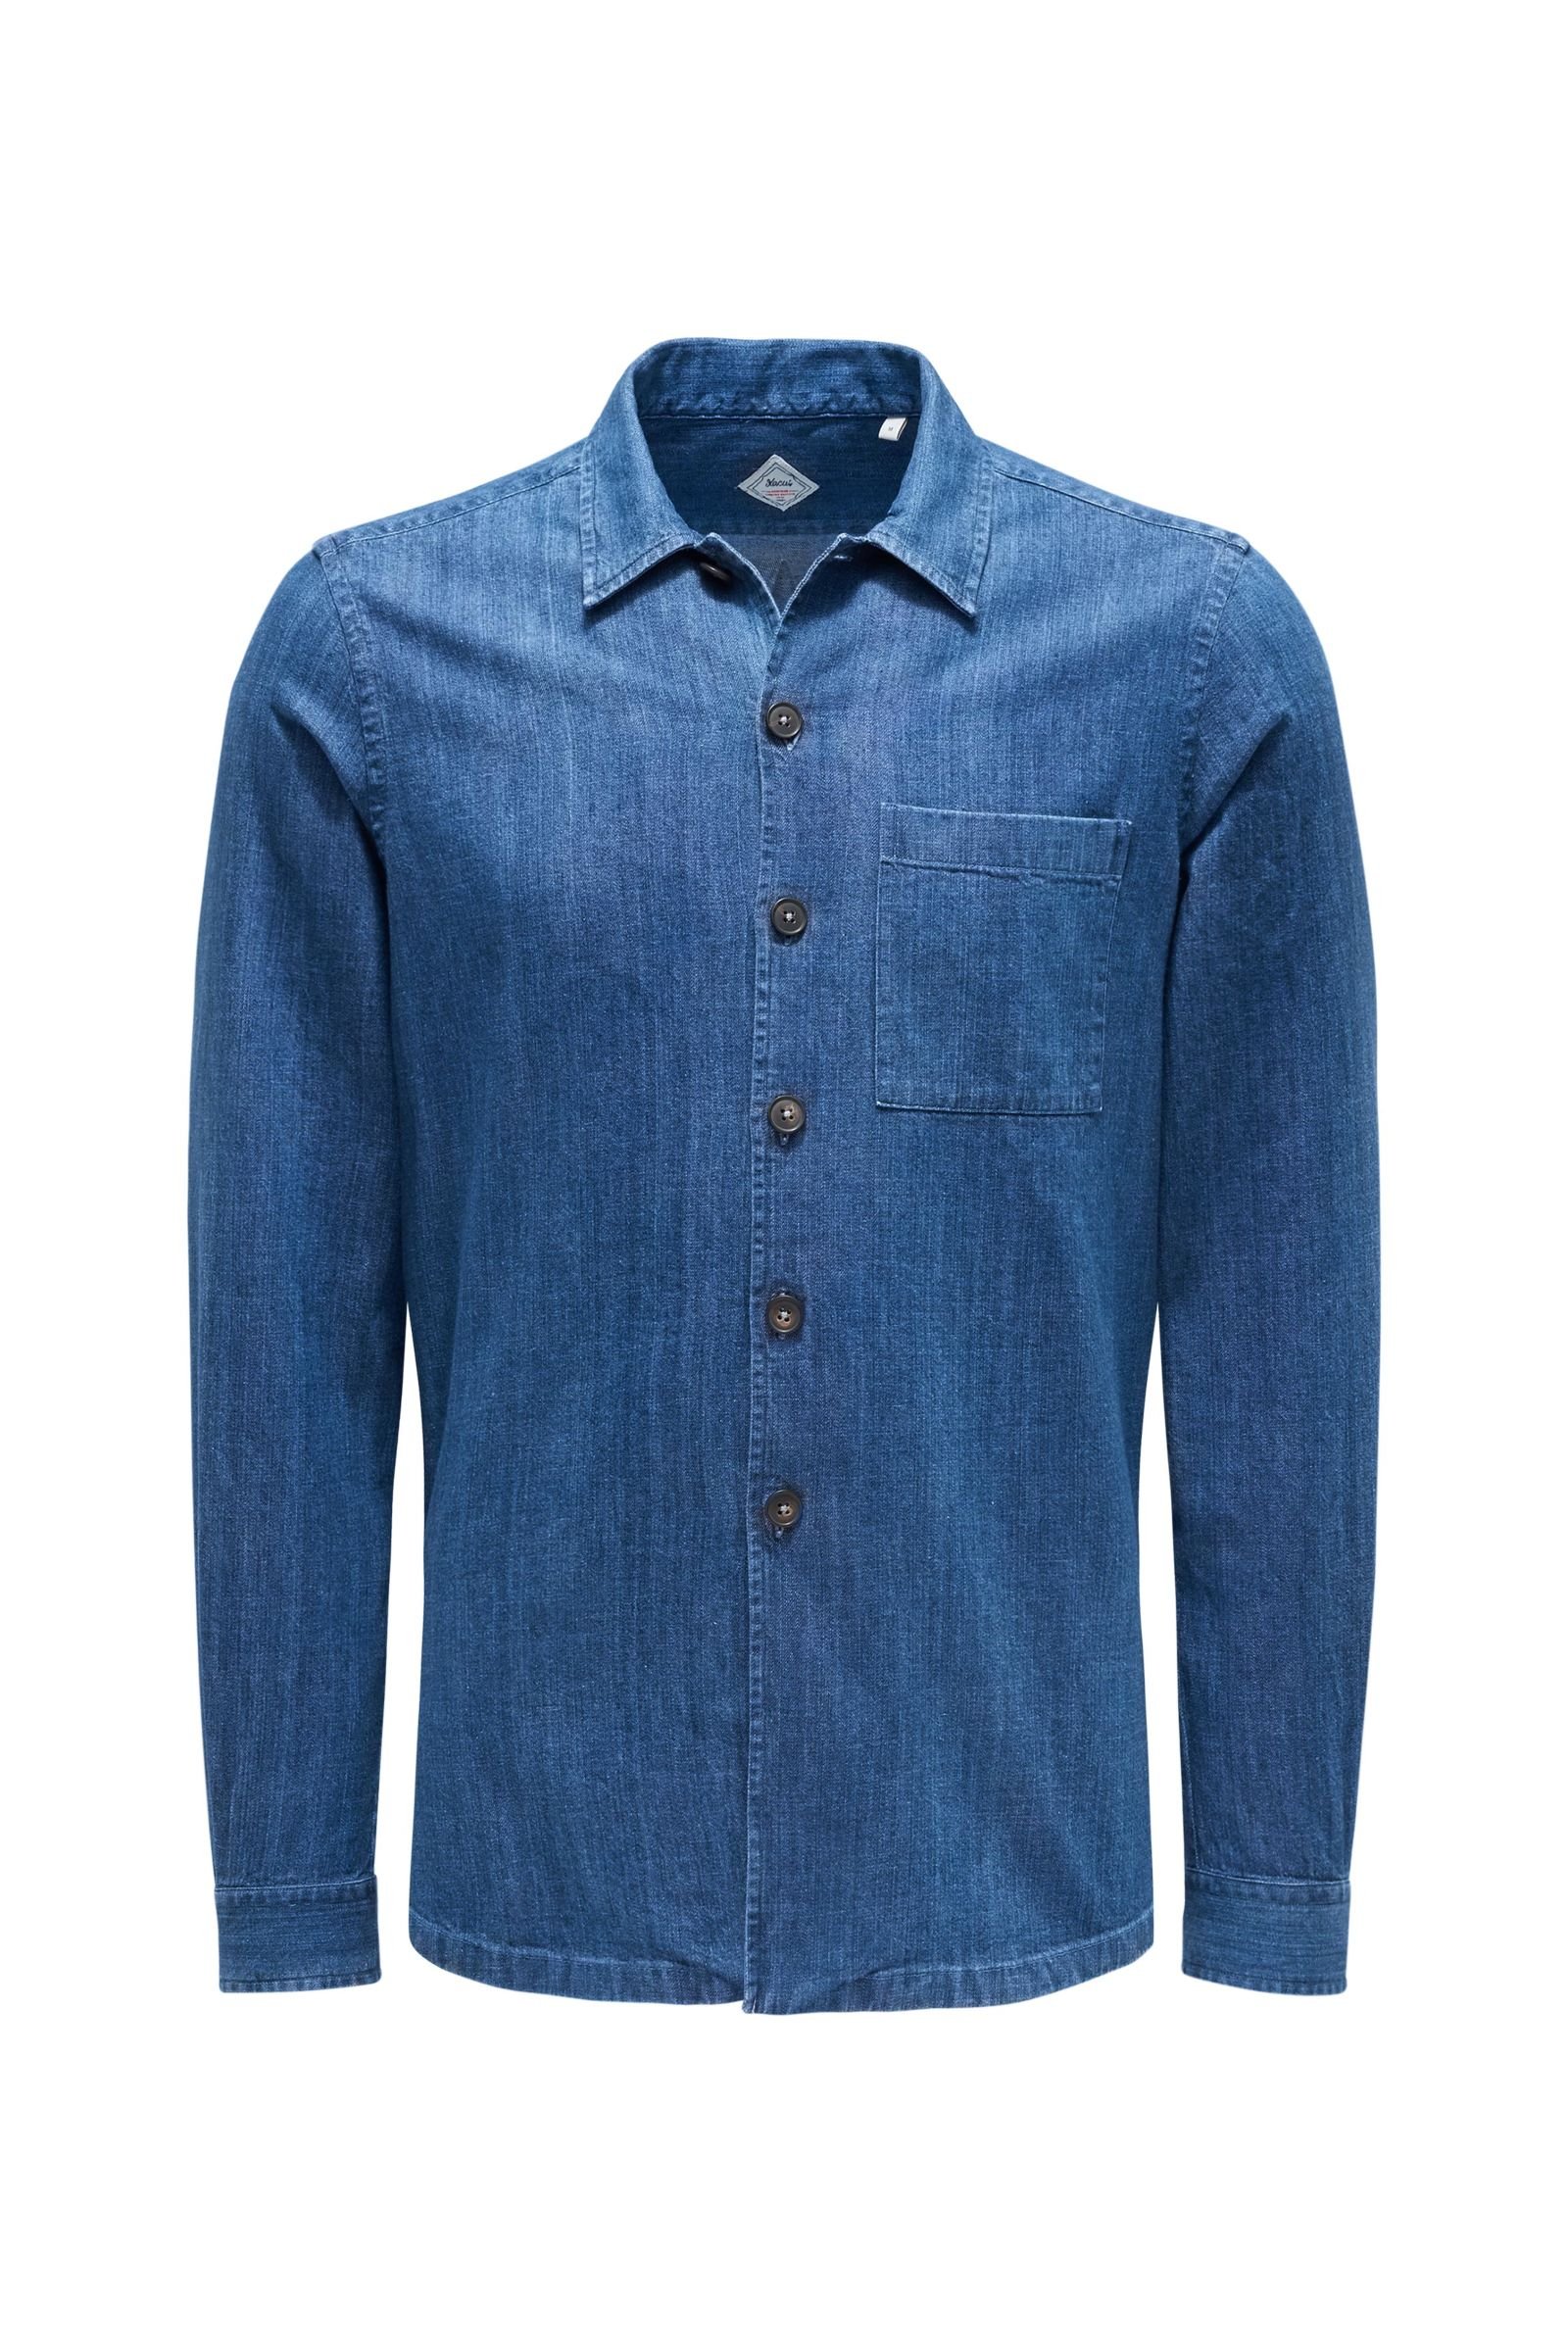 Denim overshirt 'Heritage Limited Edition' grey-blue